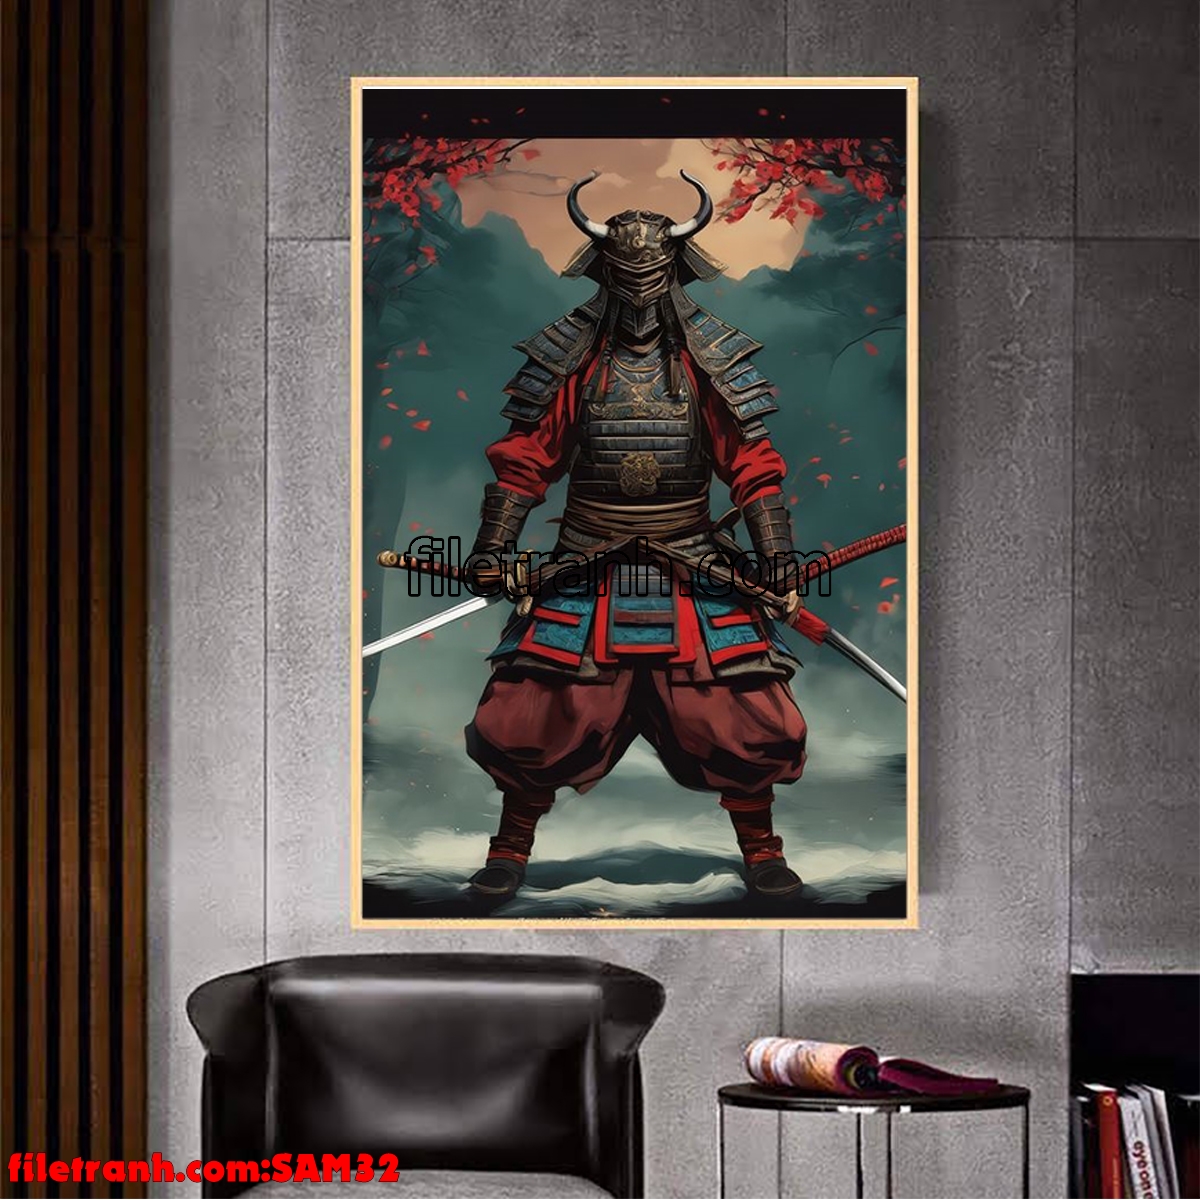 https://filetranh.com/samurai/file-tranh-samurai-vo-si-nhat-ban-sam32.html